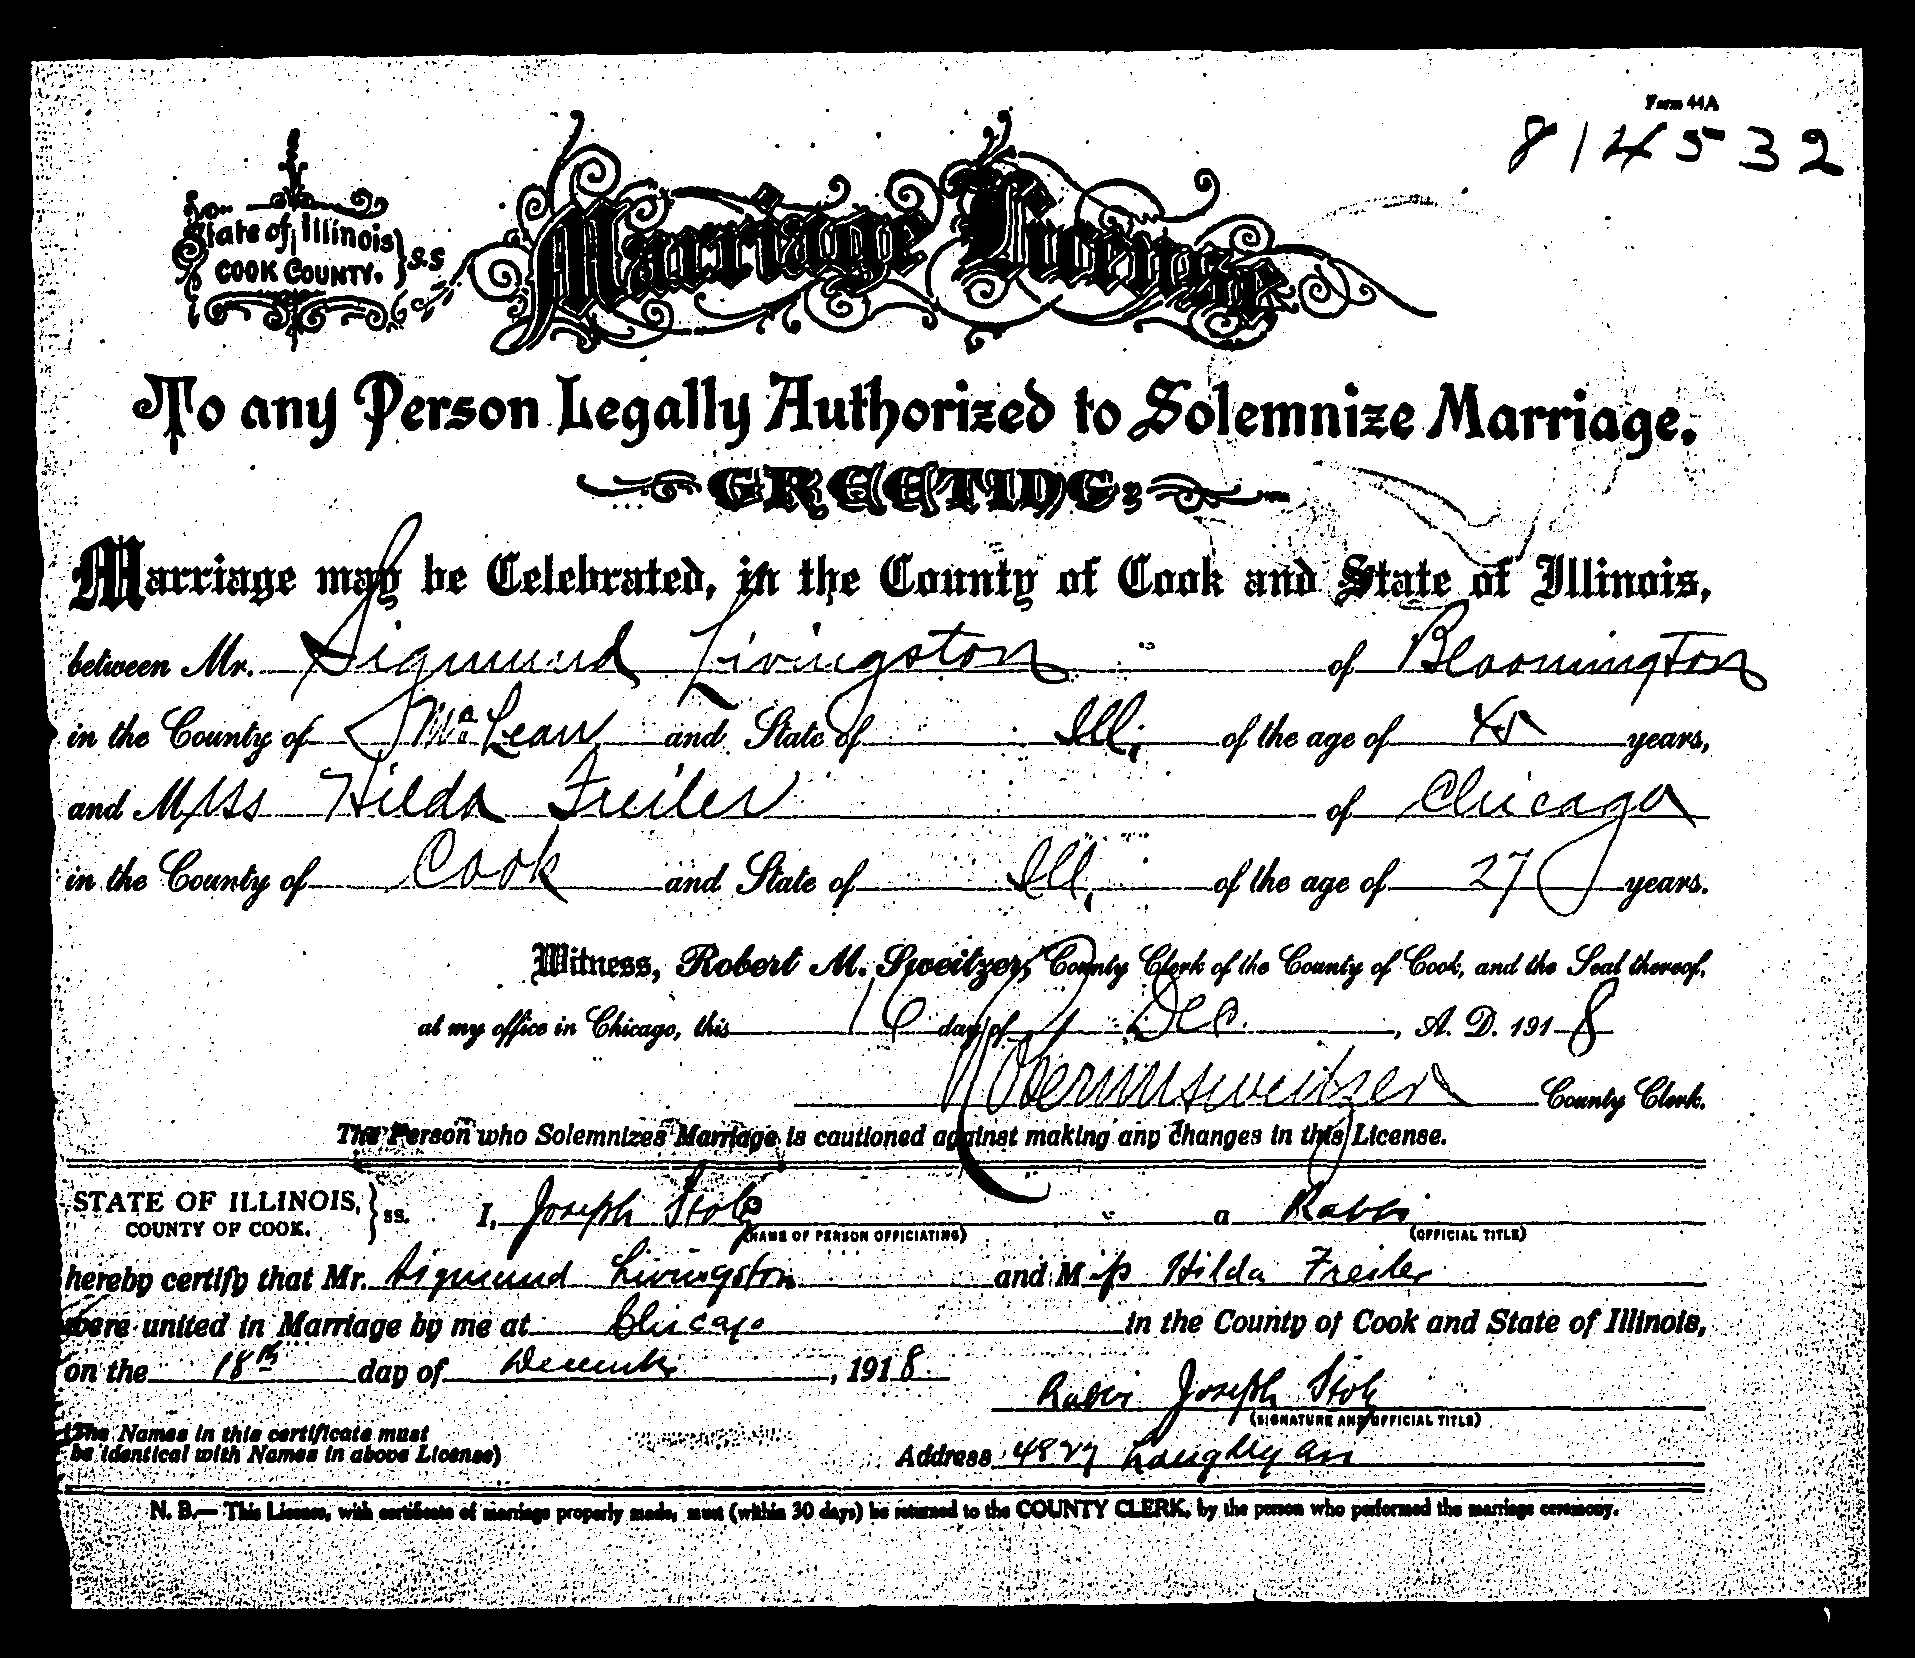 Sigmund Livingston and Hilda Freiler marriage certificate, 18 December 1918